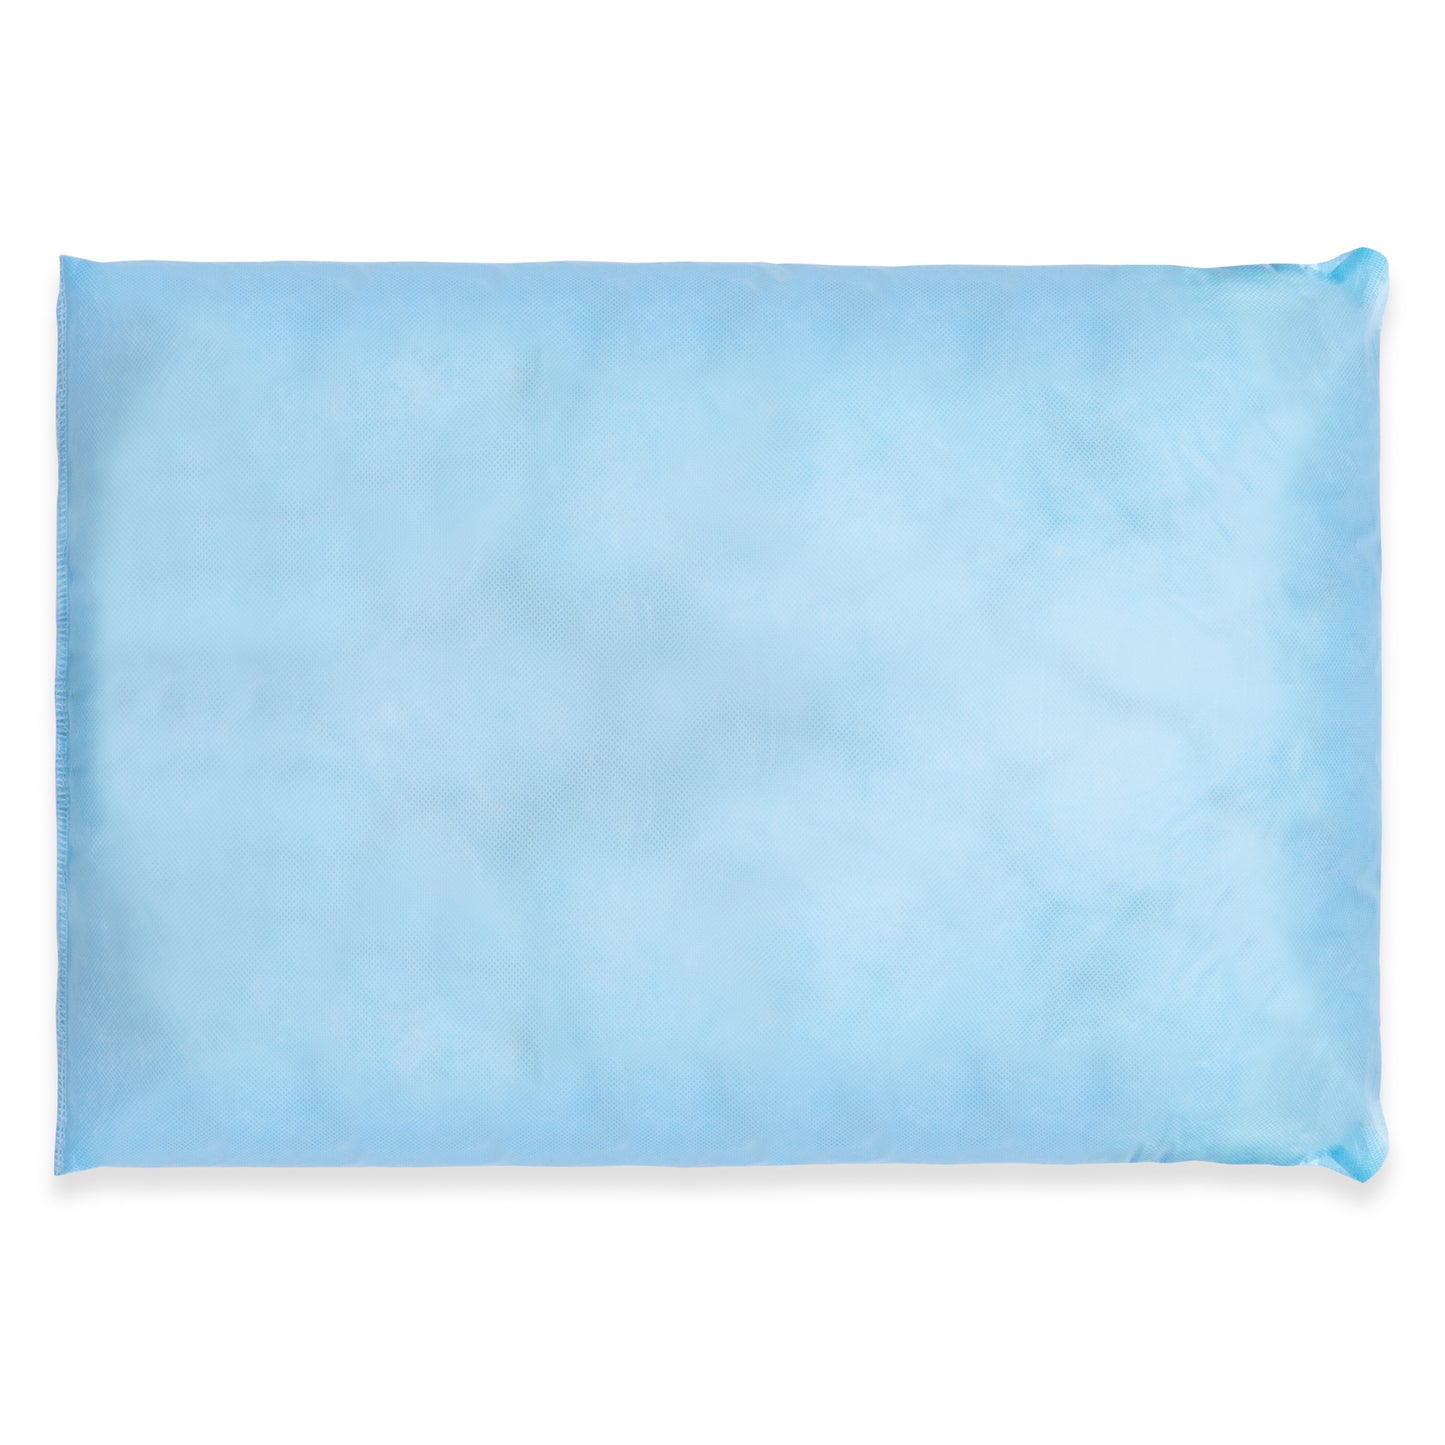 Pillow 19 x 25 PU Coated Polyethylene, Blue